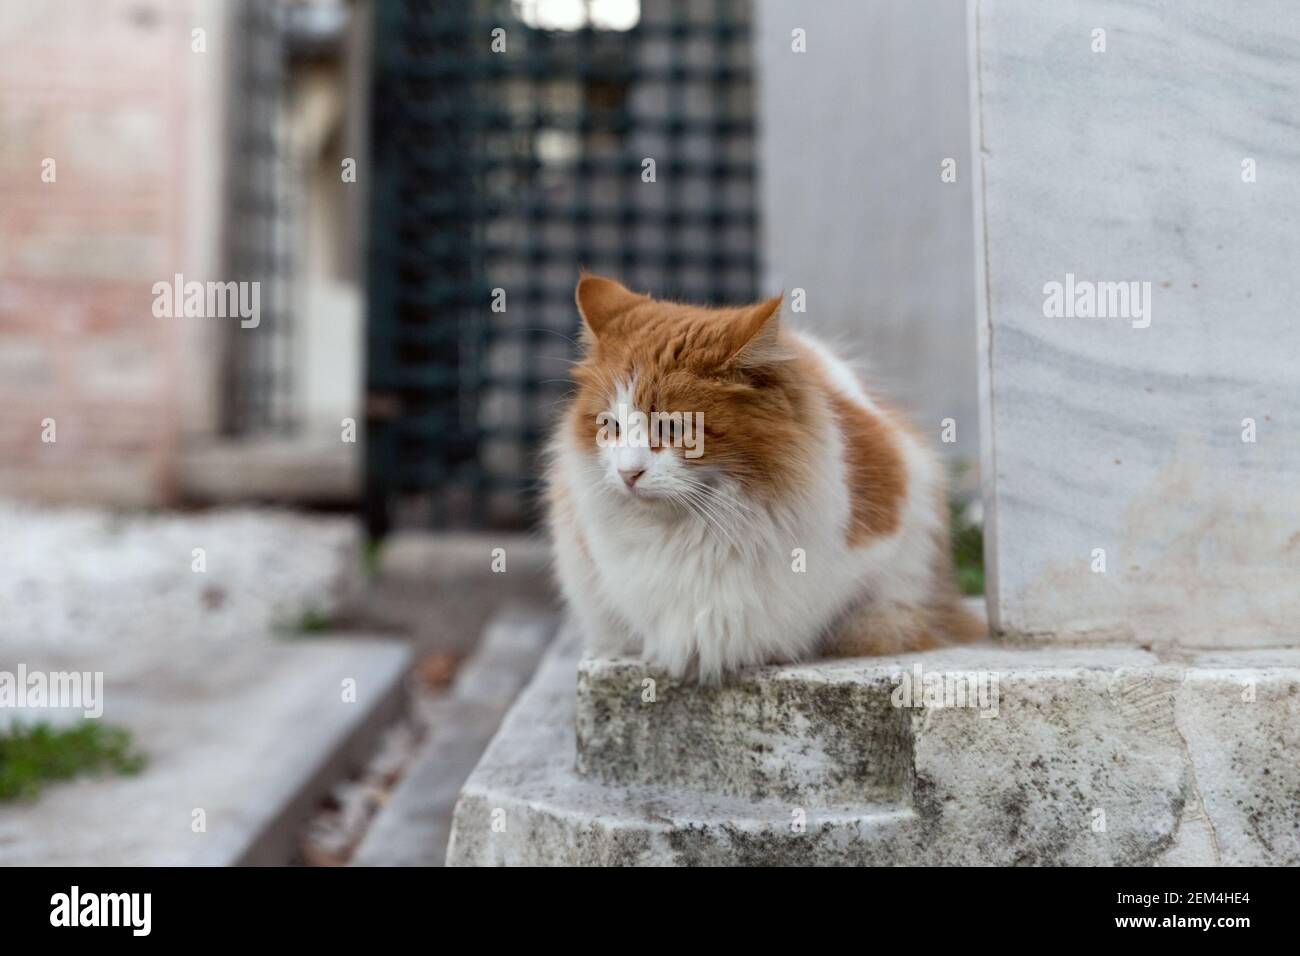 fluffy orange tabby cat